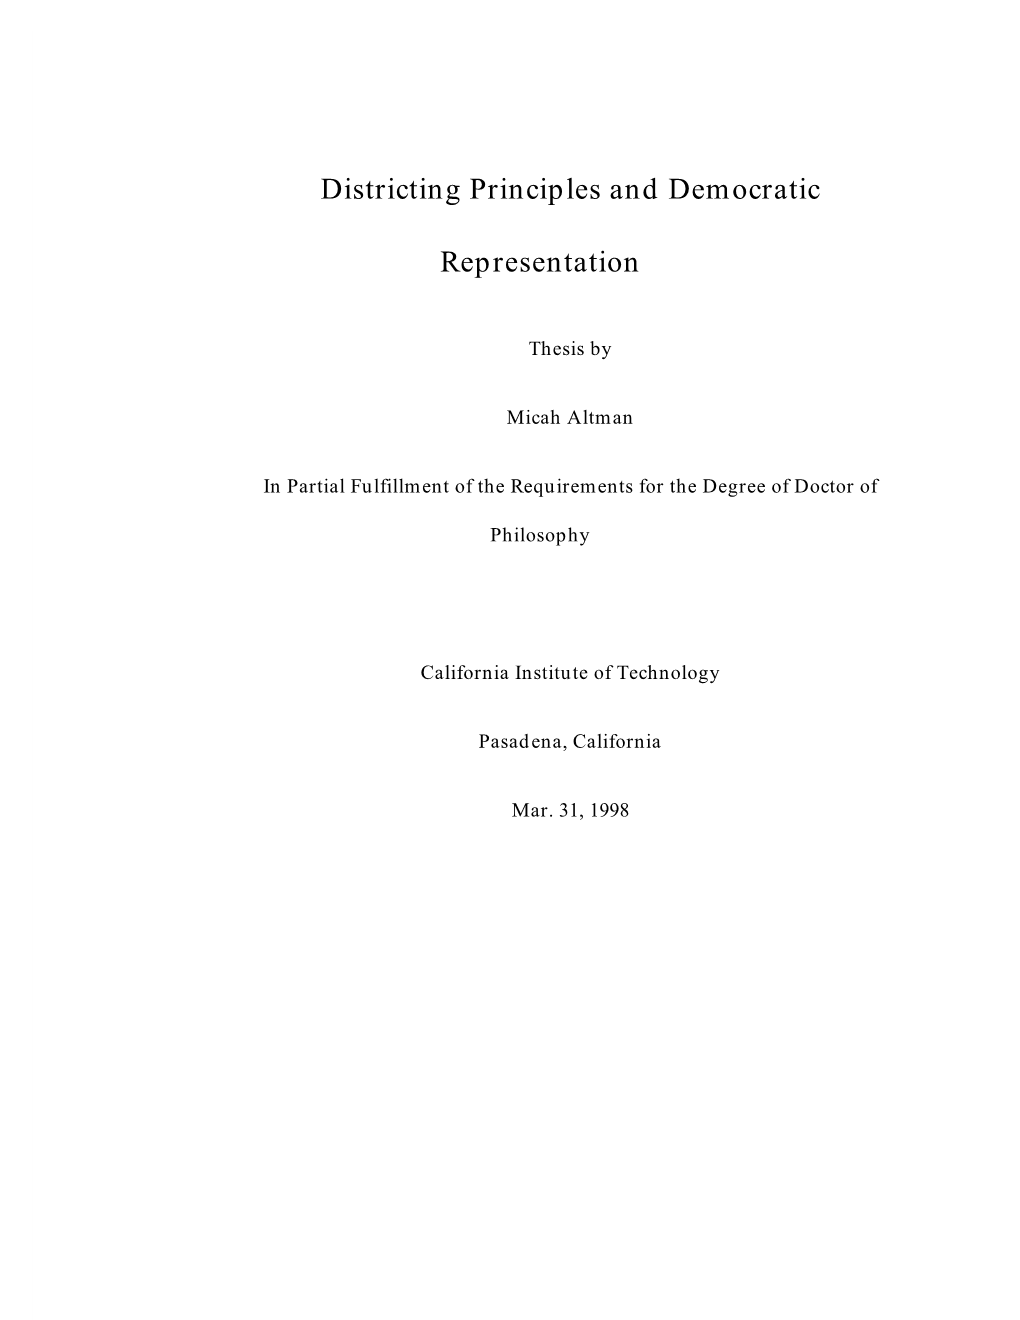 Districting Principles and Democratic Representation